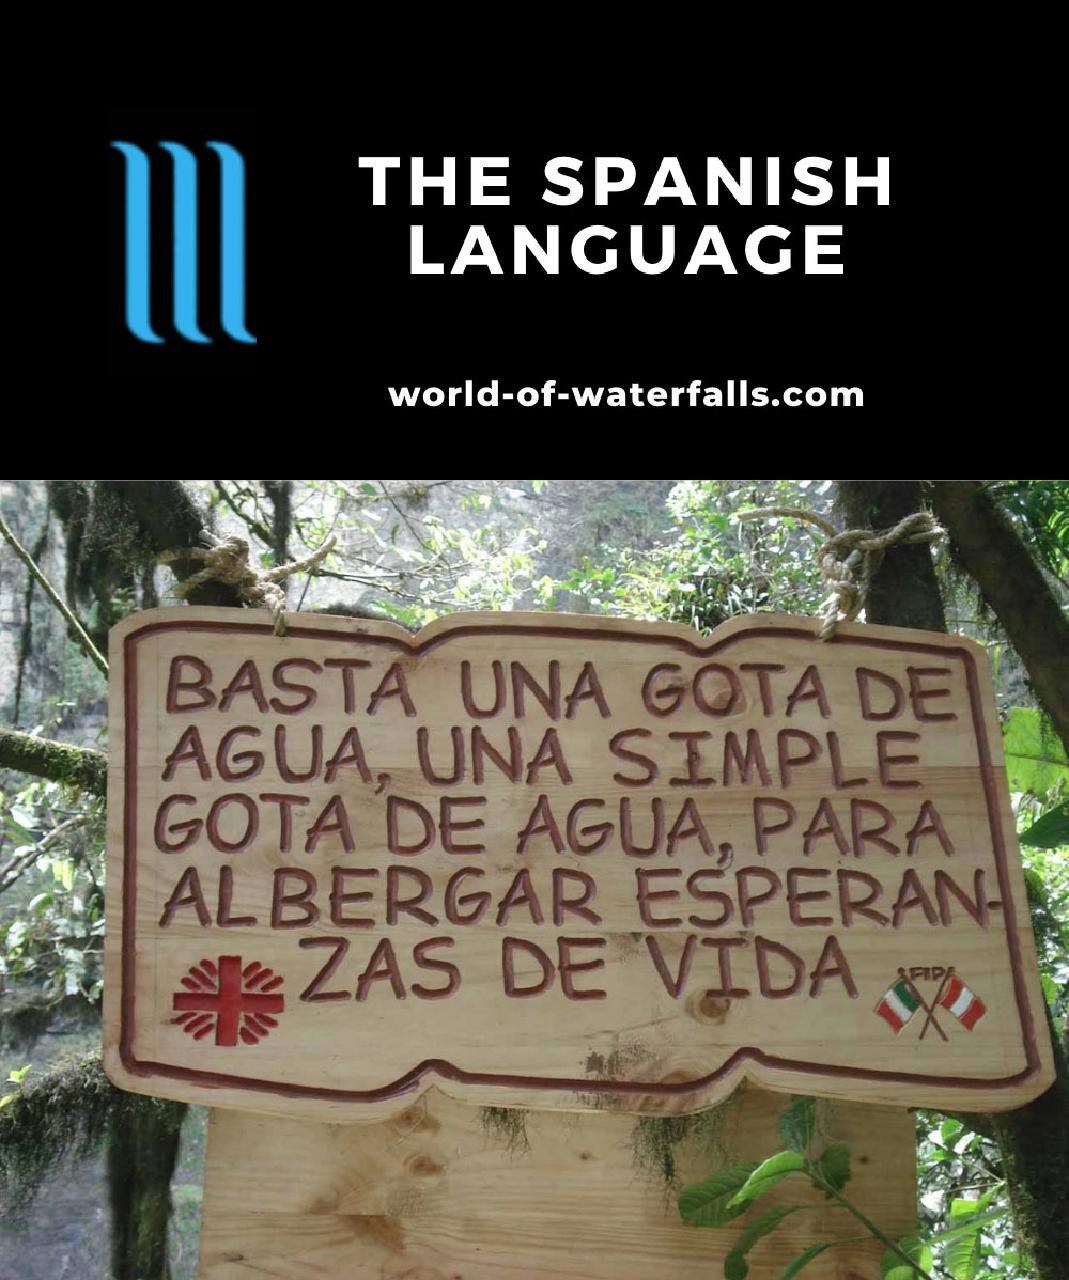 The Spanish Language